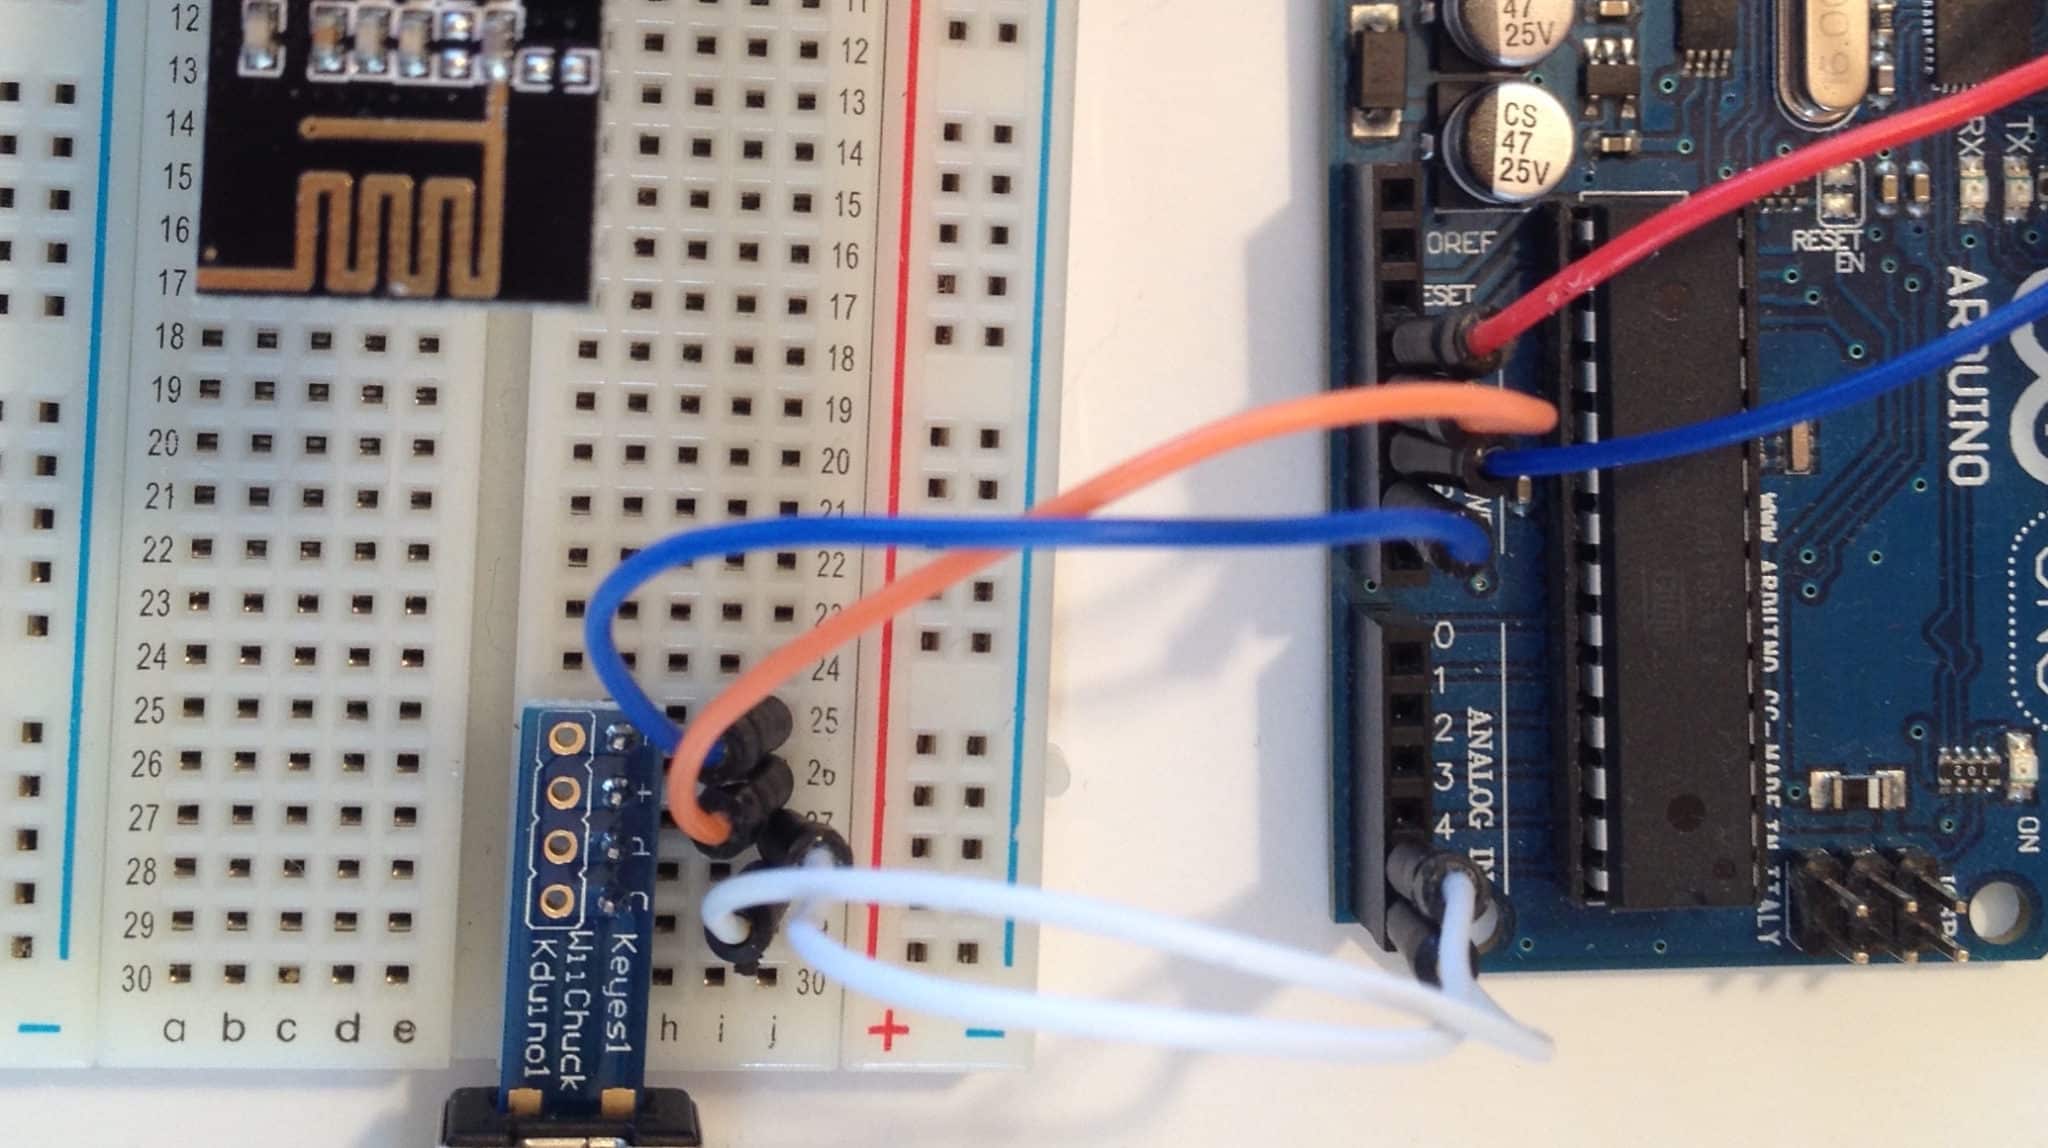 Make an Arduino remote controlled car